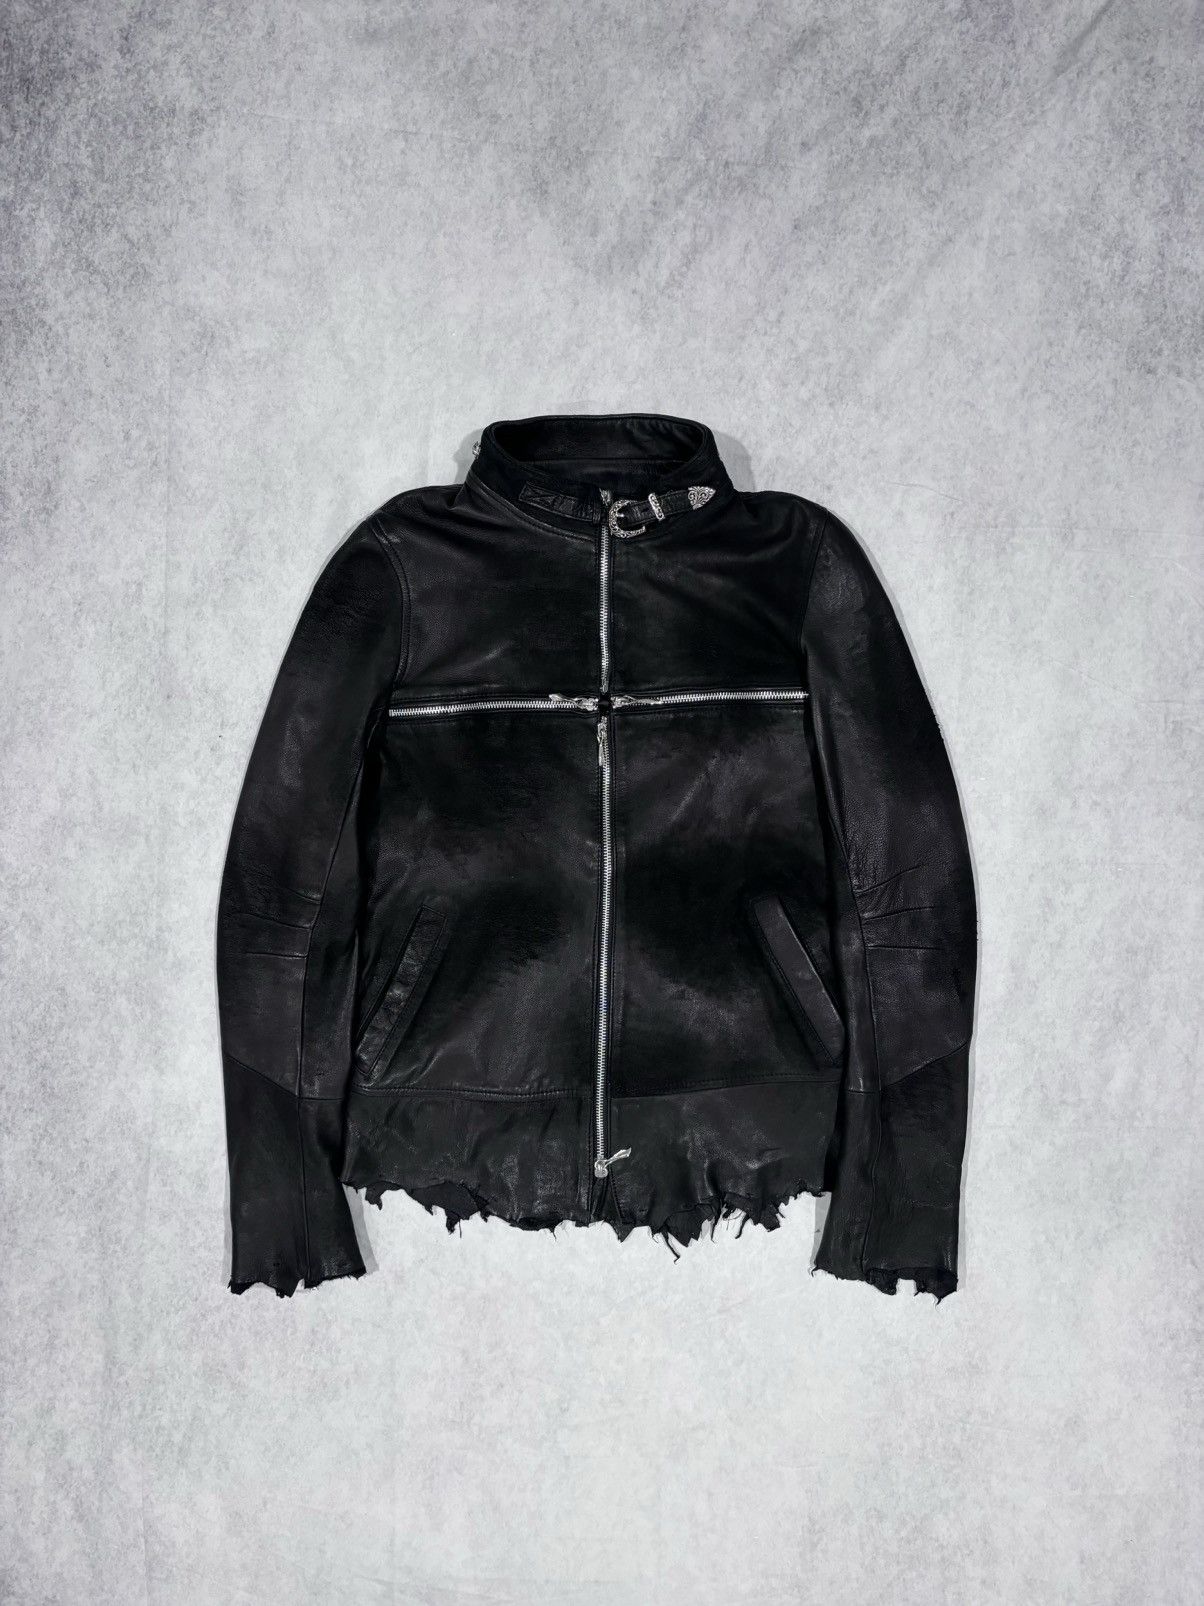 If Six Was Nine LGB Blistered Leather Bono Jacket | Grailed